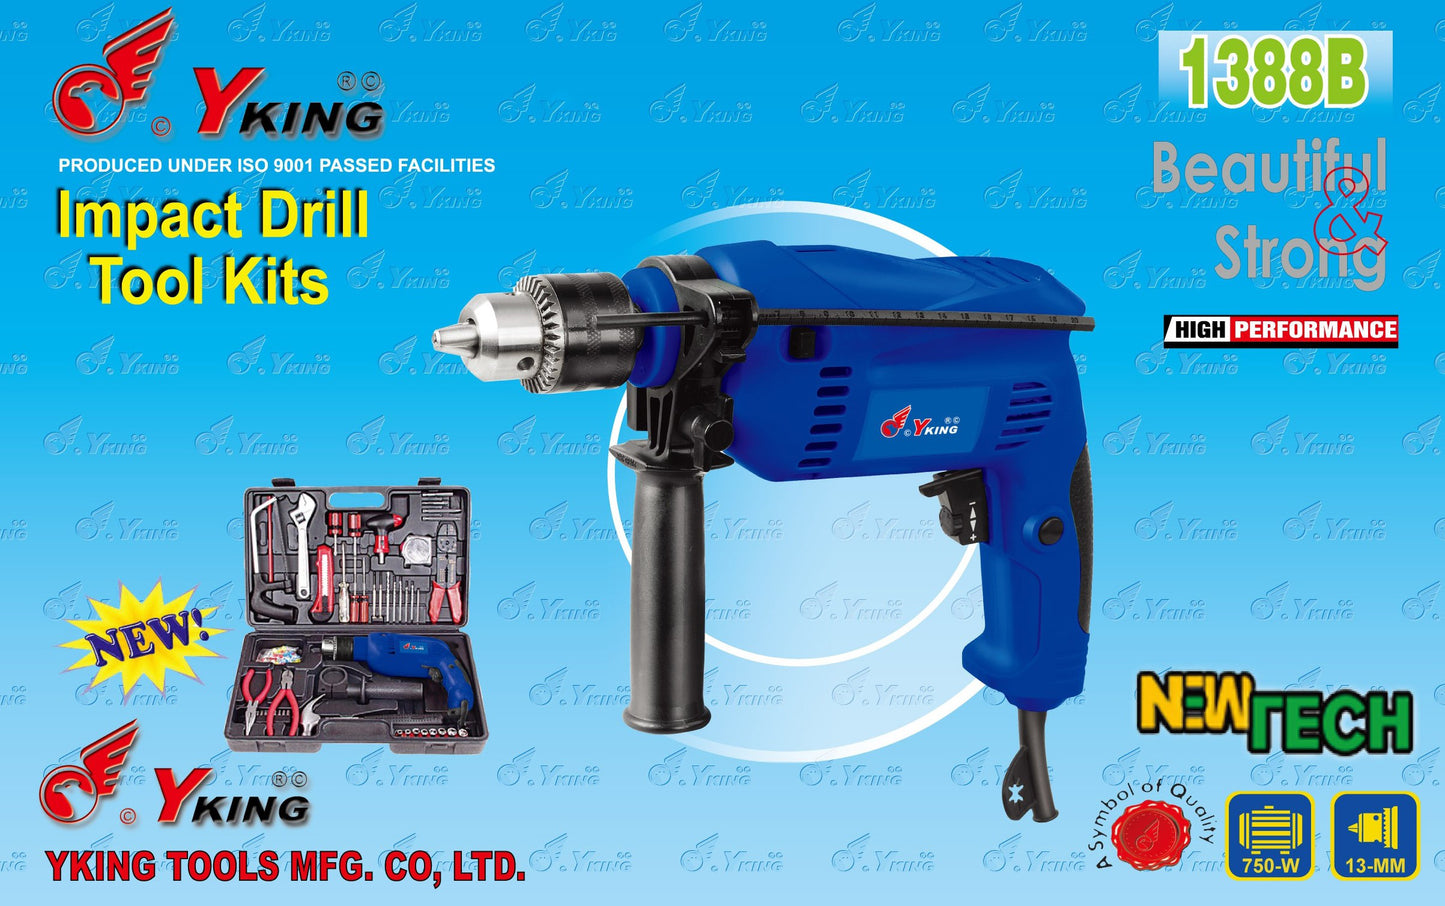 Yking Tool Kit With Impact Drill Machine - Model 1388-B